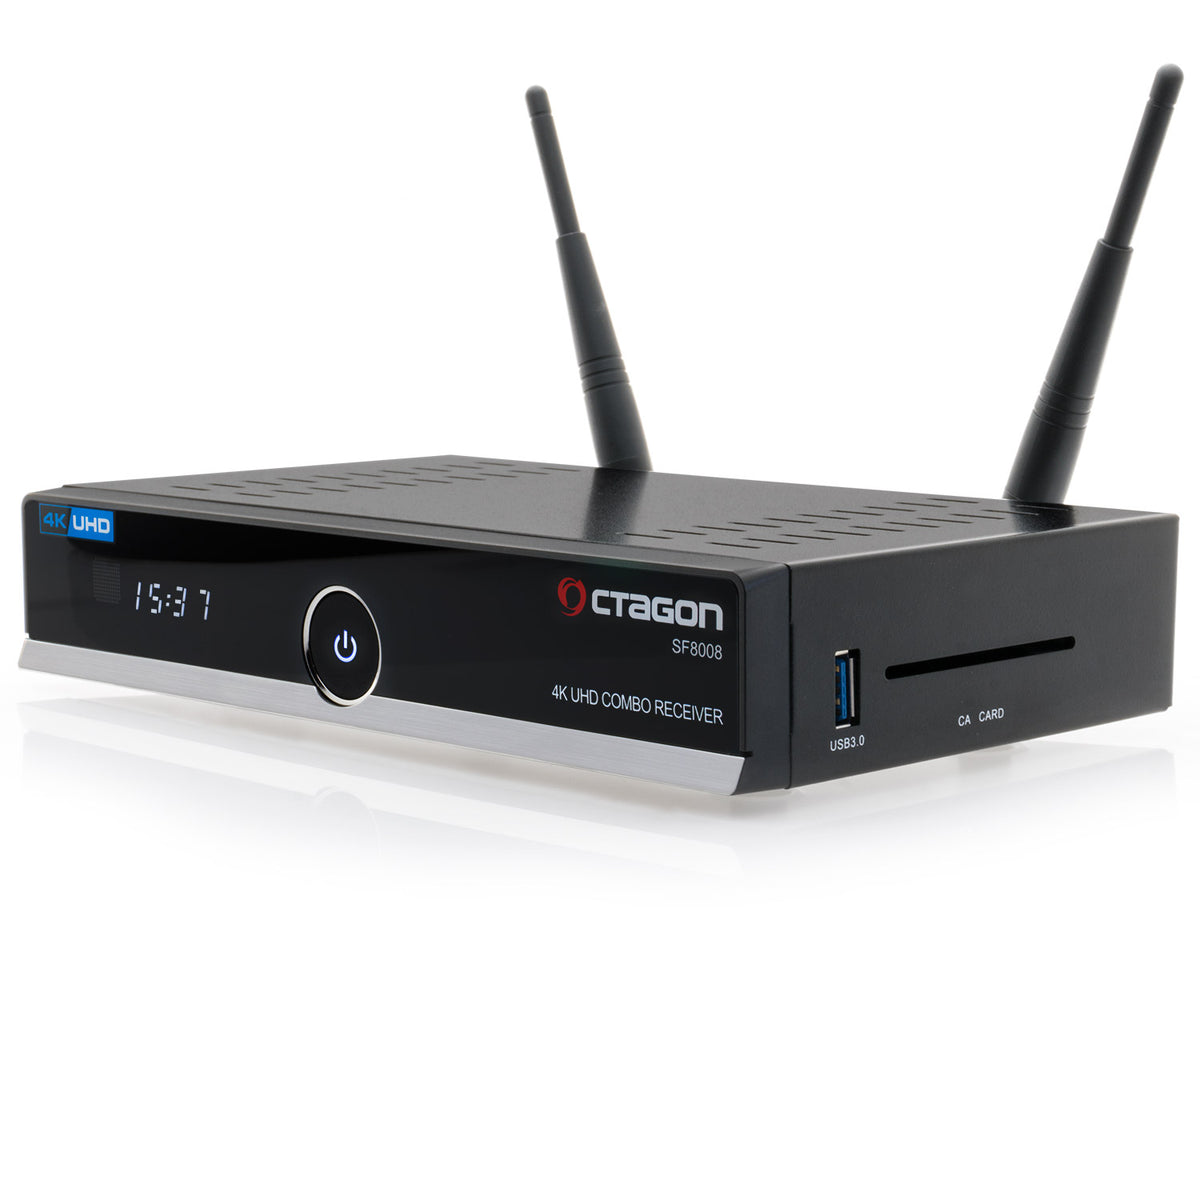 OCTAGON SF8008 4K UHD E2 2160p H.265 E2 Linux Dual Wifi DVB-S2X & T2C Combo Receive